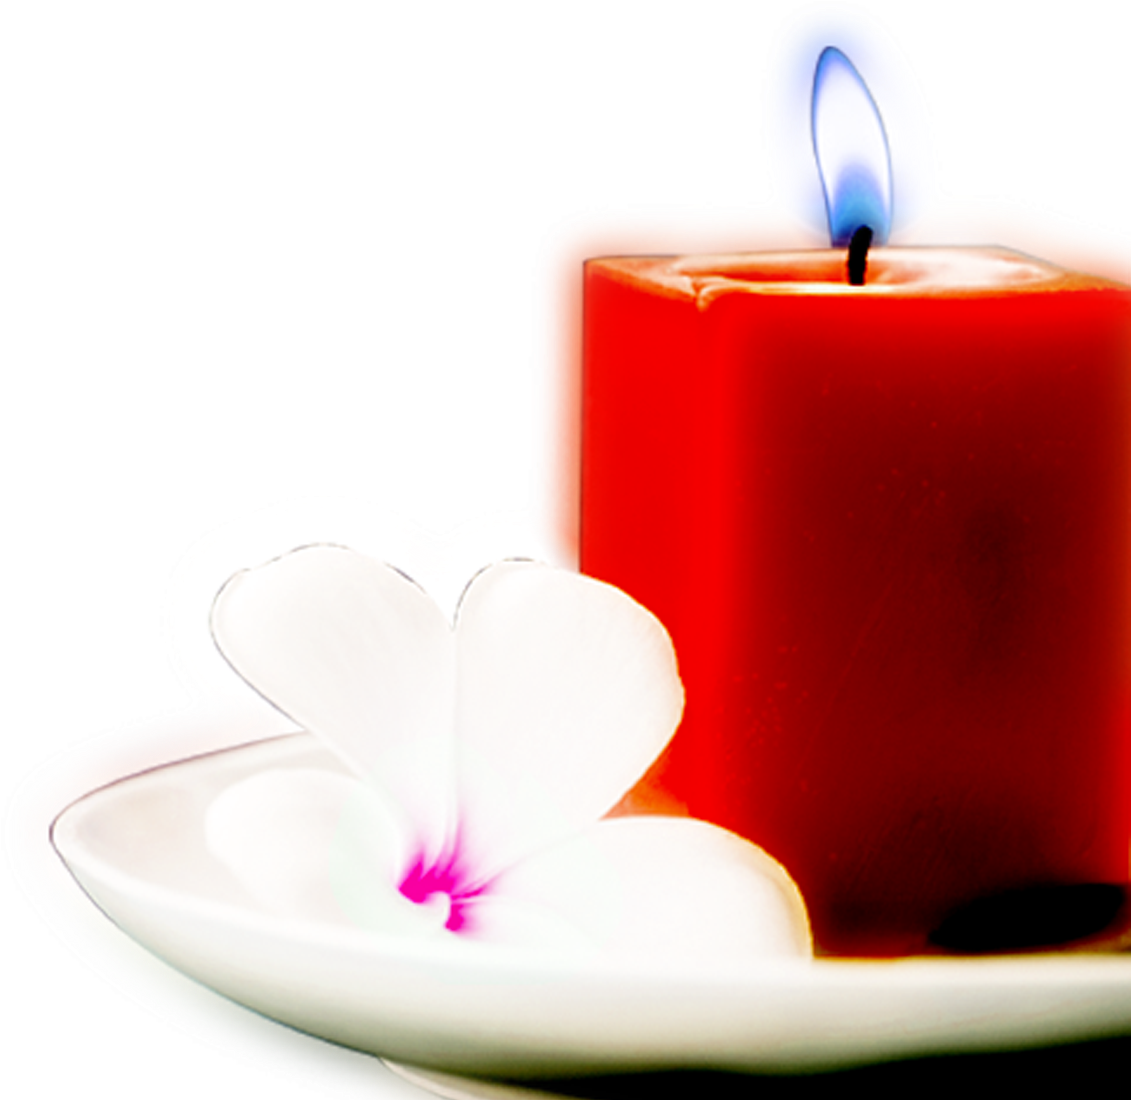 Beautiful Flowers Beautifully Candle Decorative Plates - Beautiful Flowers Beautifully Candle Decorative Plates (1183x1099)